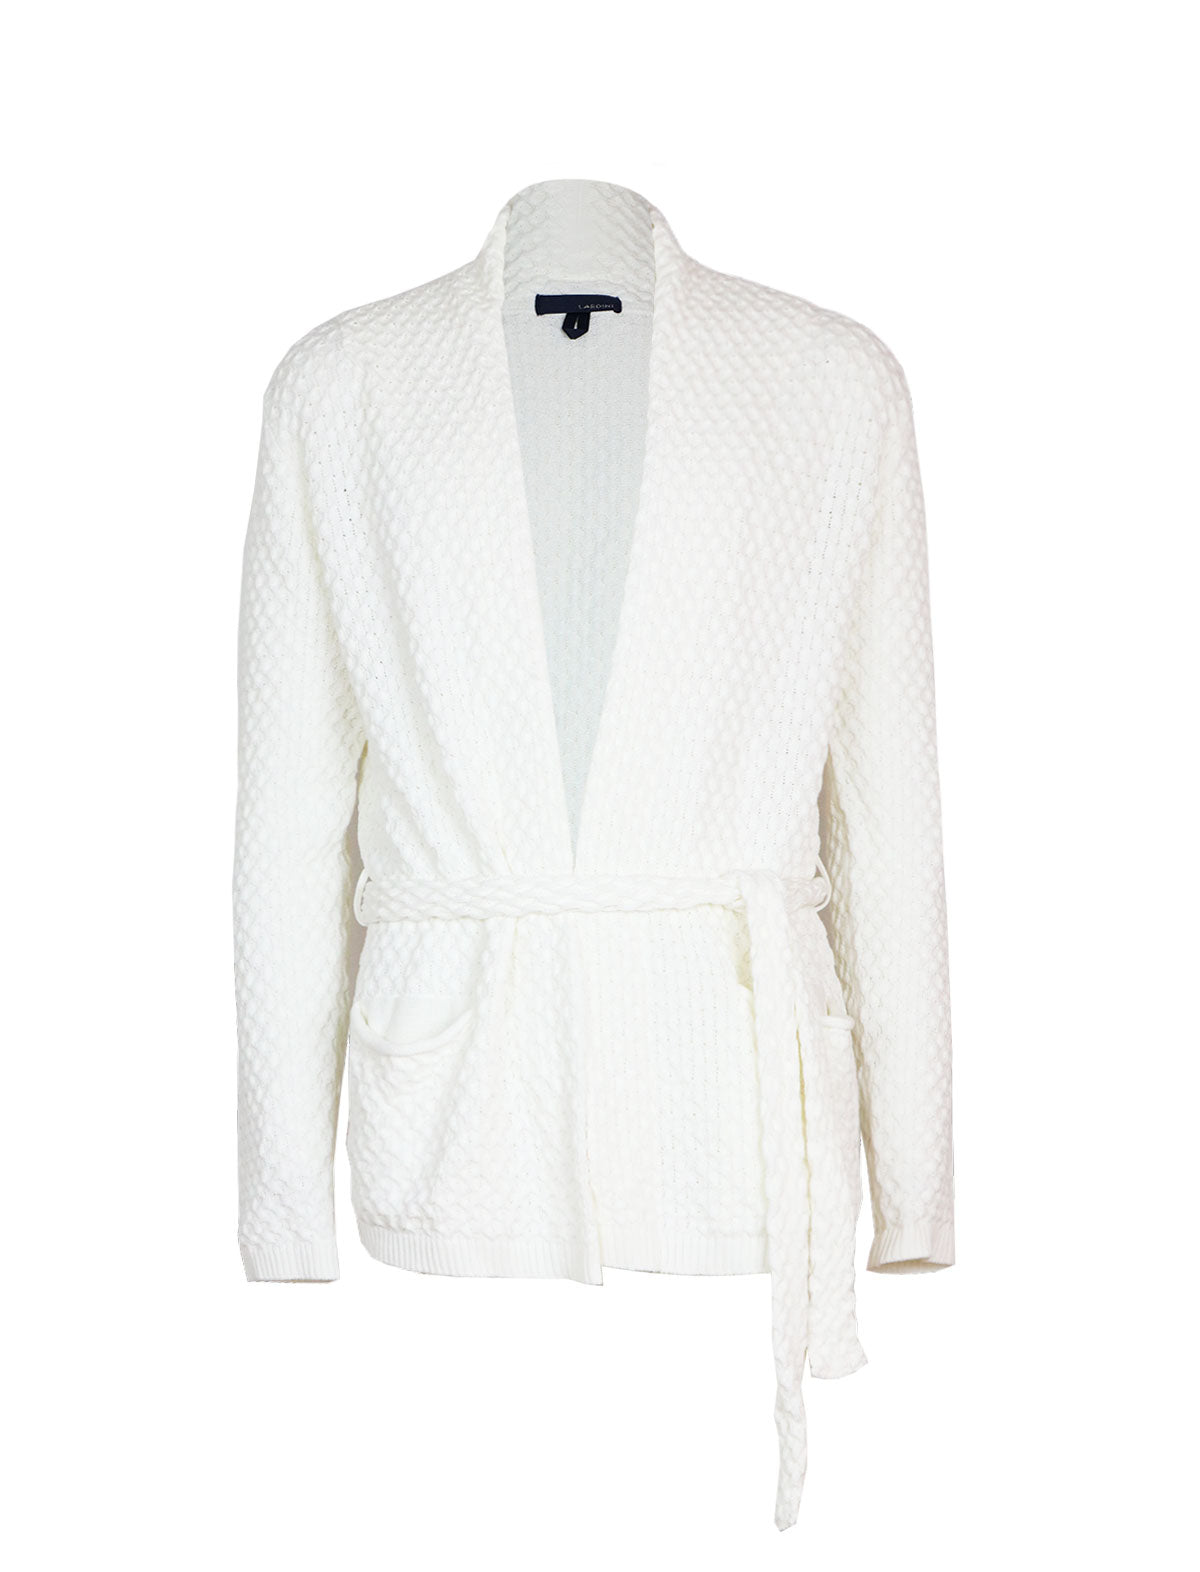 Lardini Belted Knit Cardigan in White